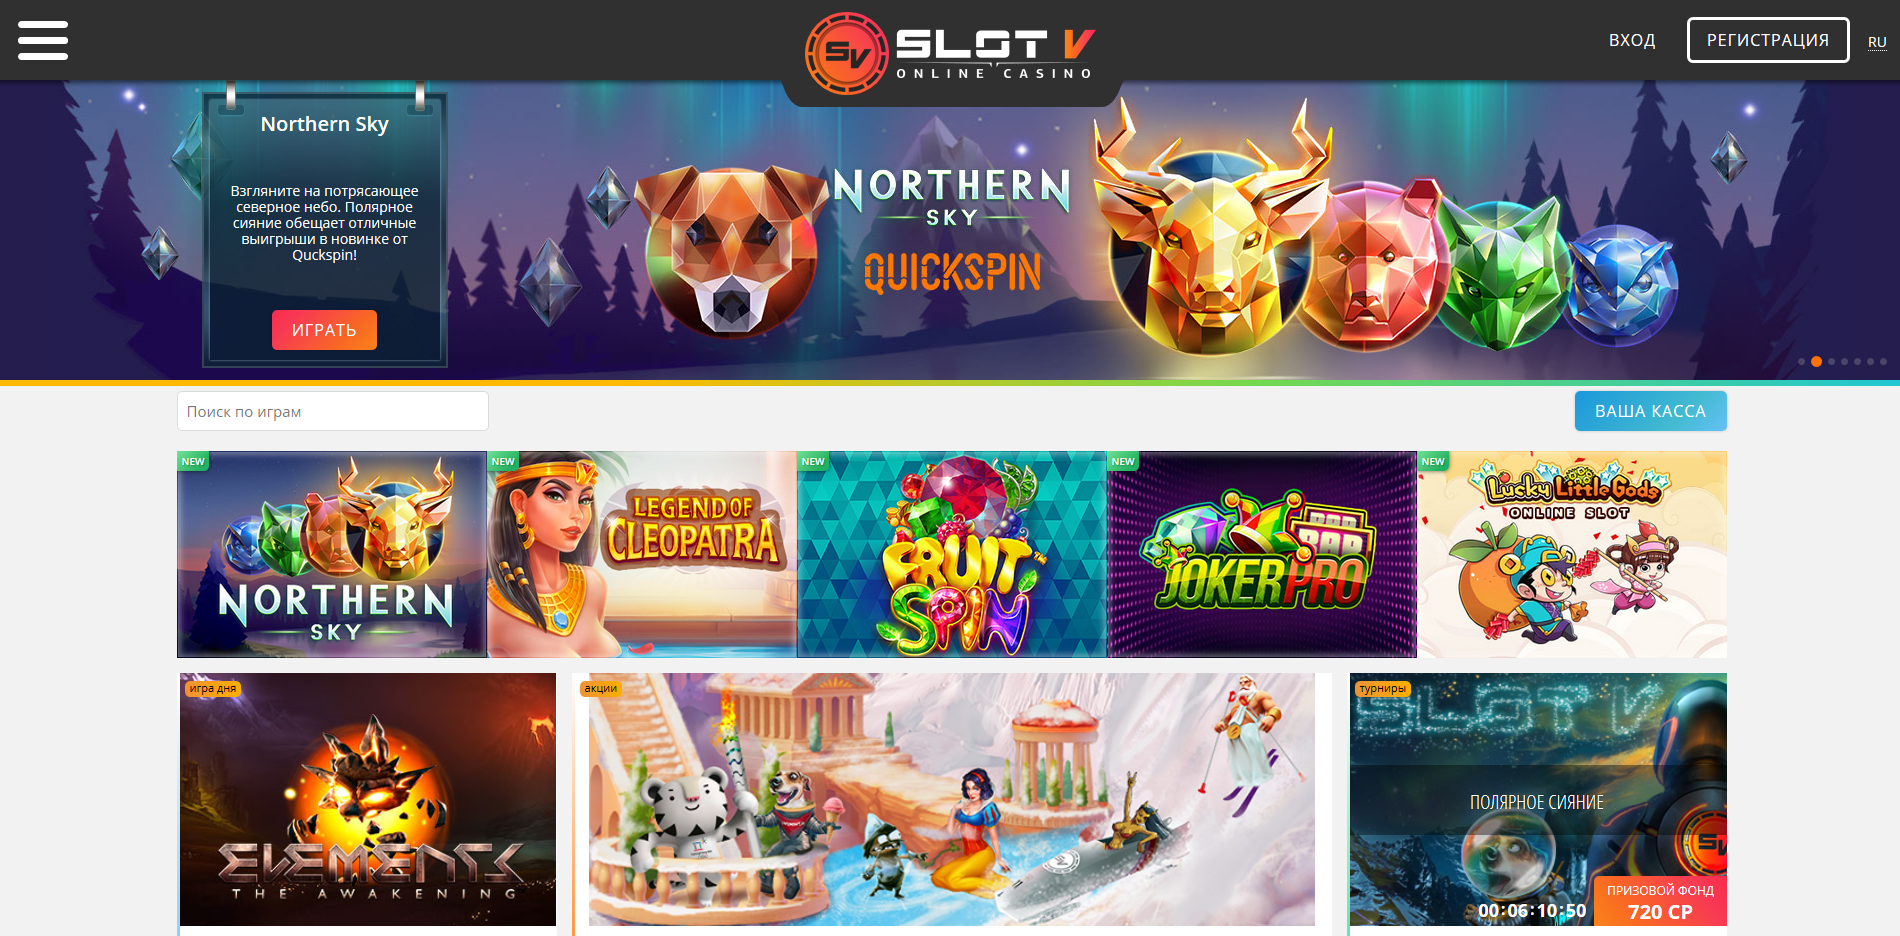 Slot v casino вход slotvcasino2 ru https jet26 casino ru